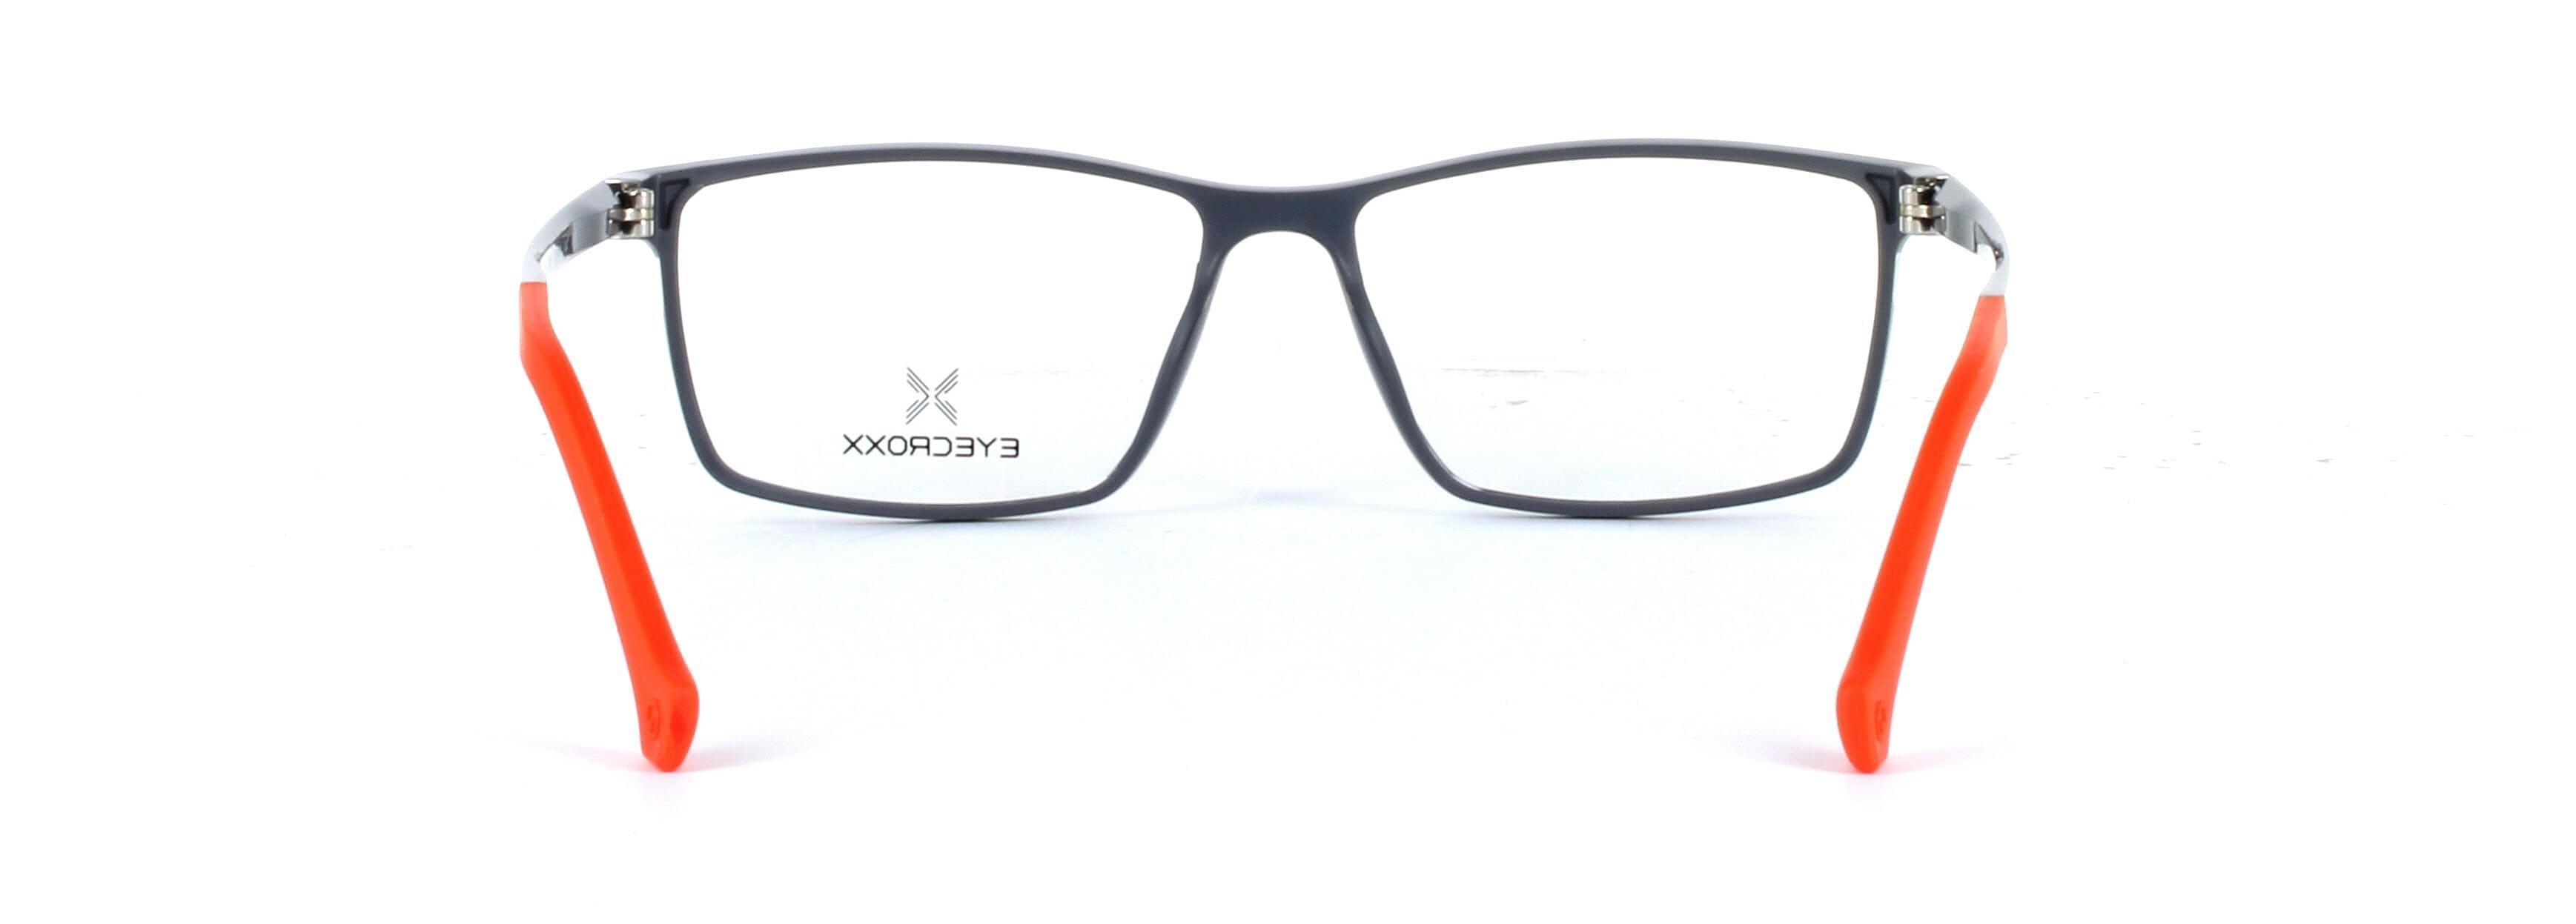 Eyecroxx 587-C4 Grey and Orange Full Rim Rectangular Plastic Glasses - Image View 3